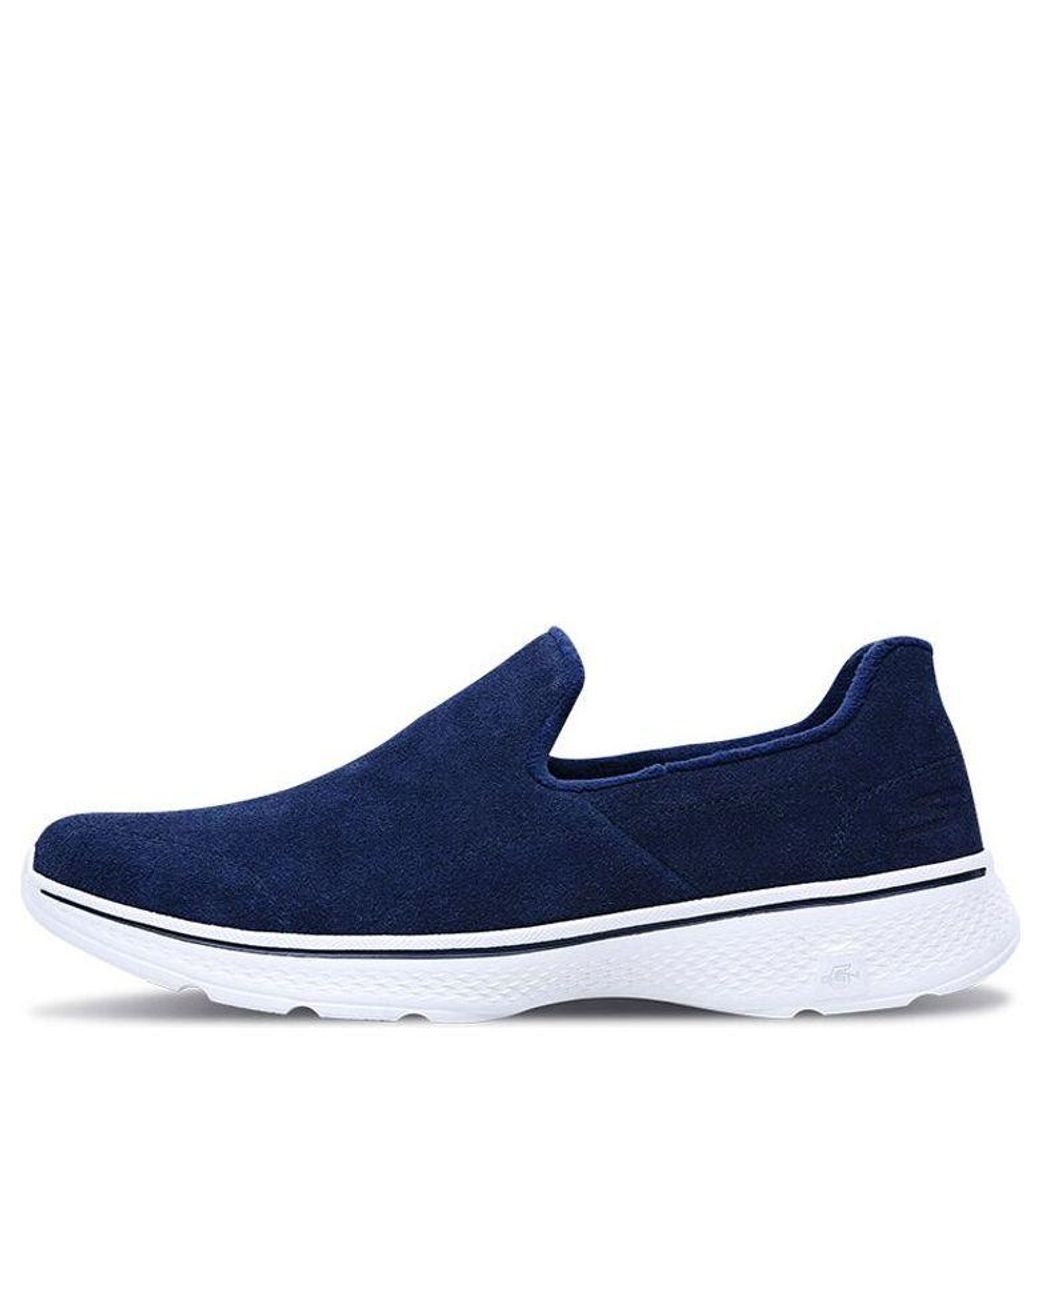 Skechers Go Walk4 Light Casual Lazy Shoes Blue/white Men | Lyst